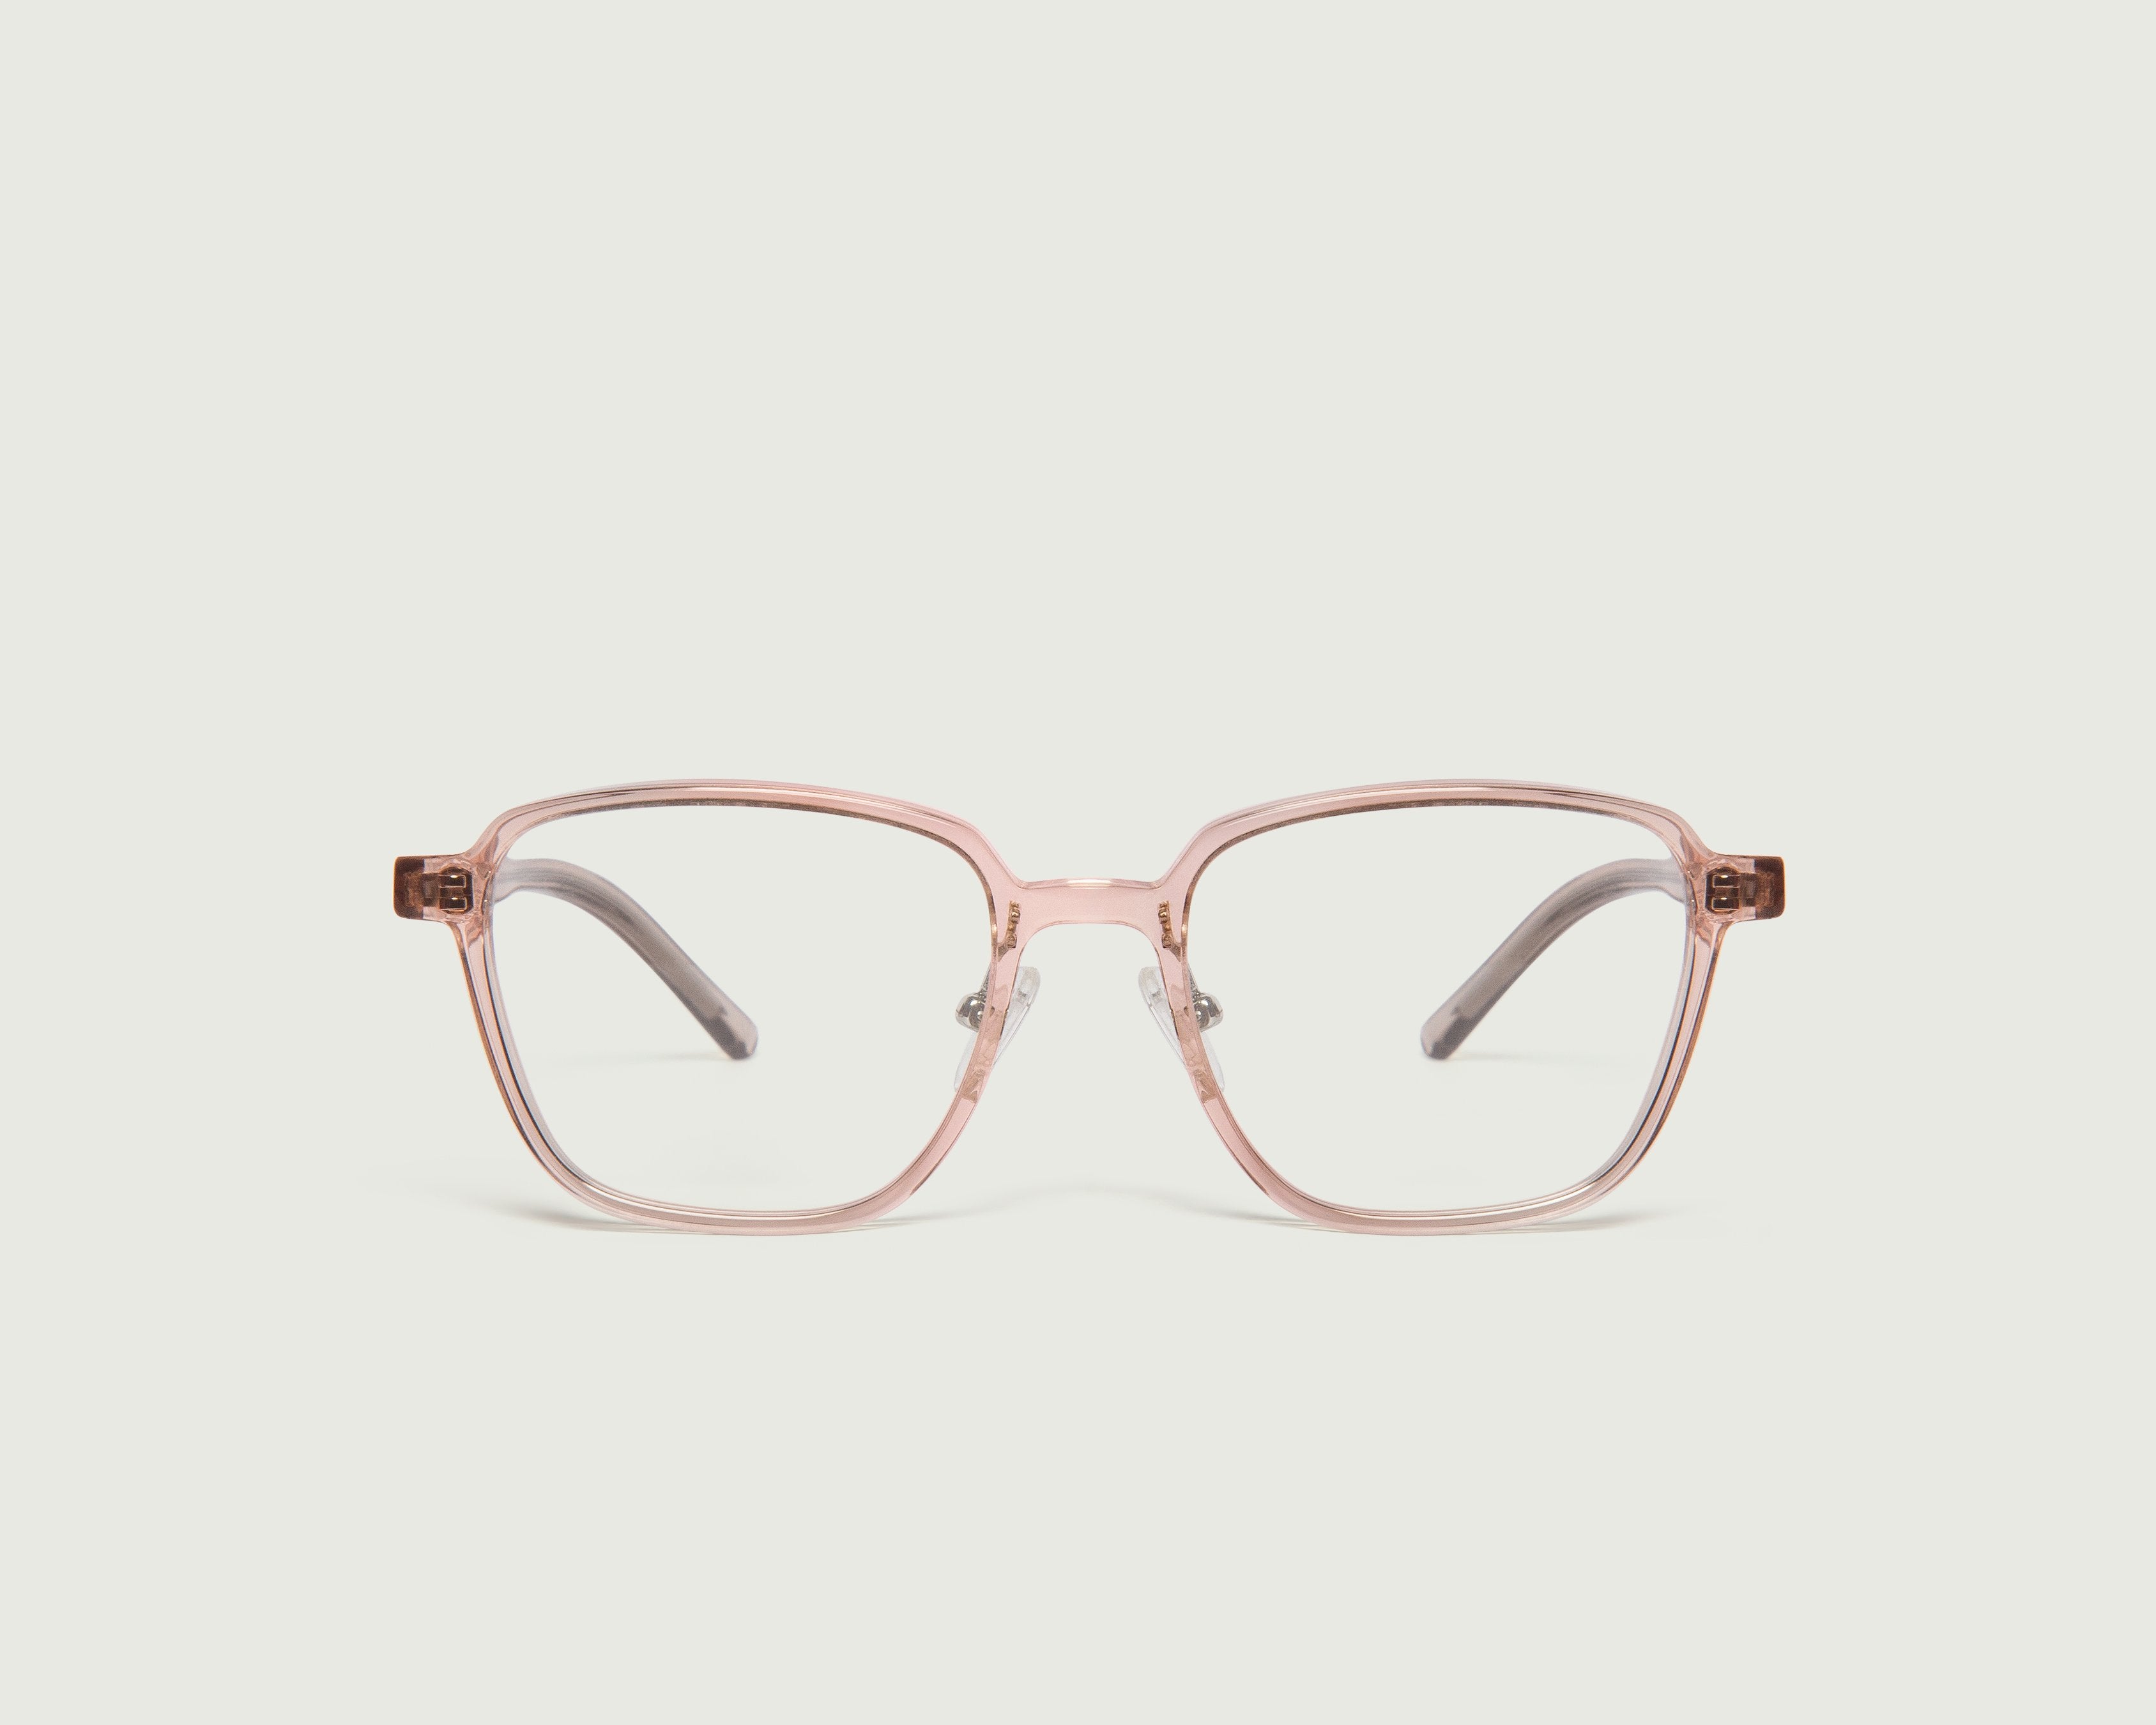 Glaze::Jensen Eyeglasses square orange acetate front